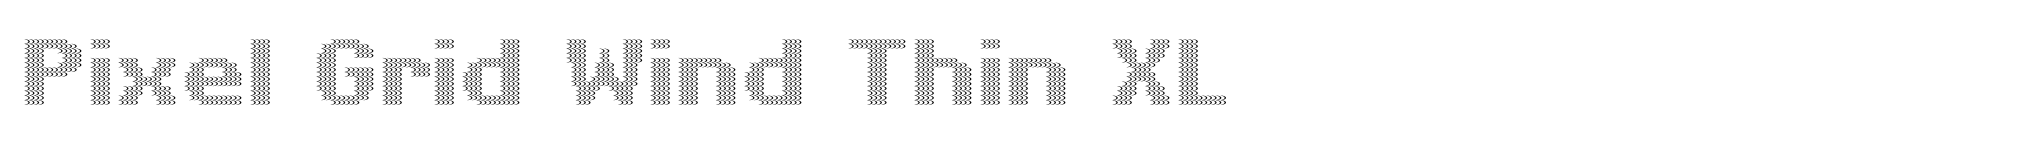 Pixel Grid Wind Thin XL image